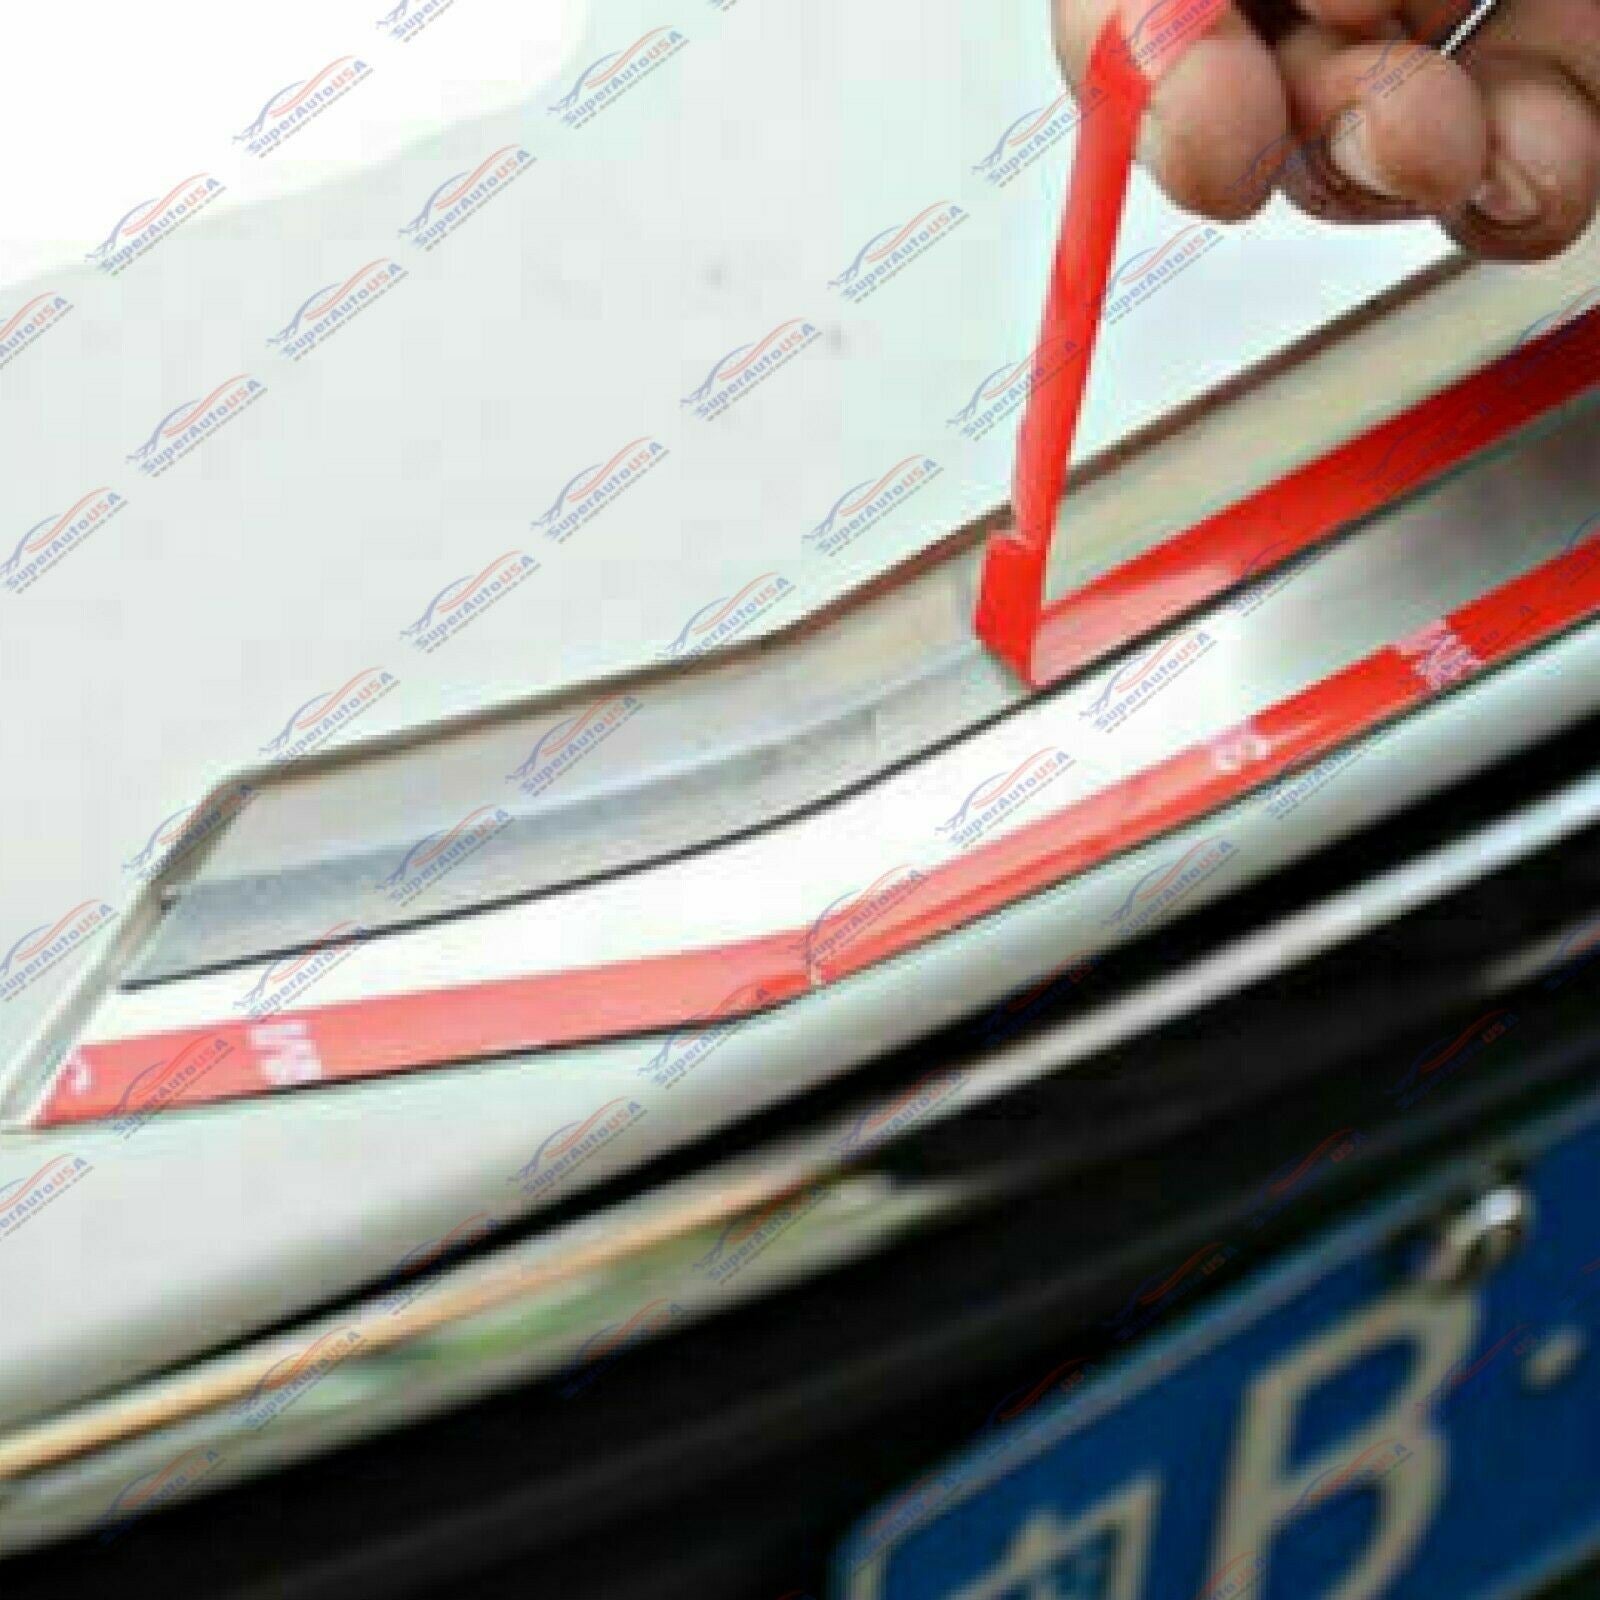 Fit 2019-2020 Toyota RAV4 Driver Passenger Side Door Handle Covers Trim (Mirror Chrome)